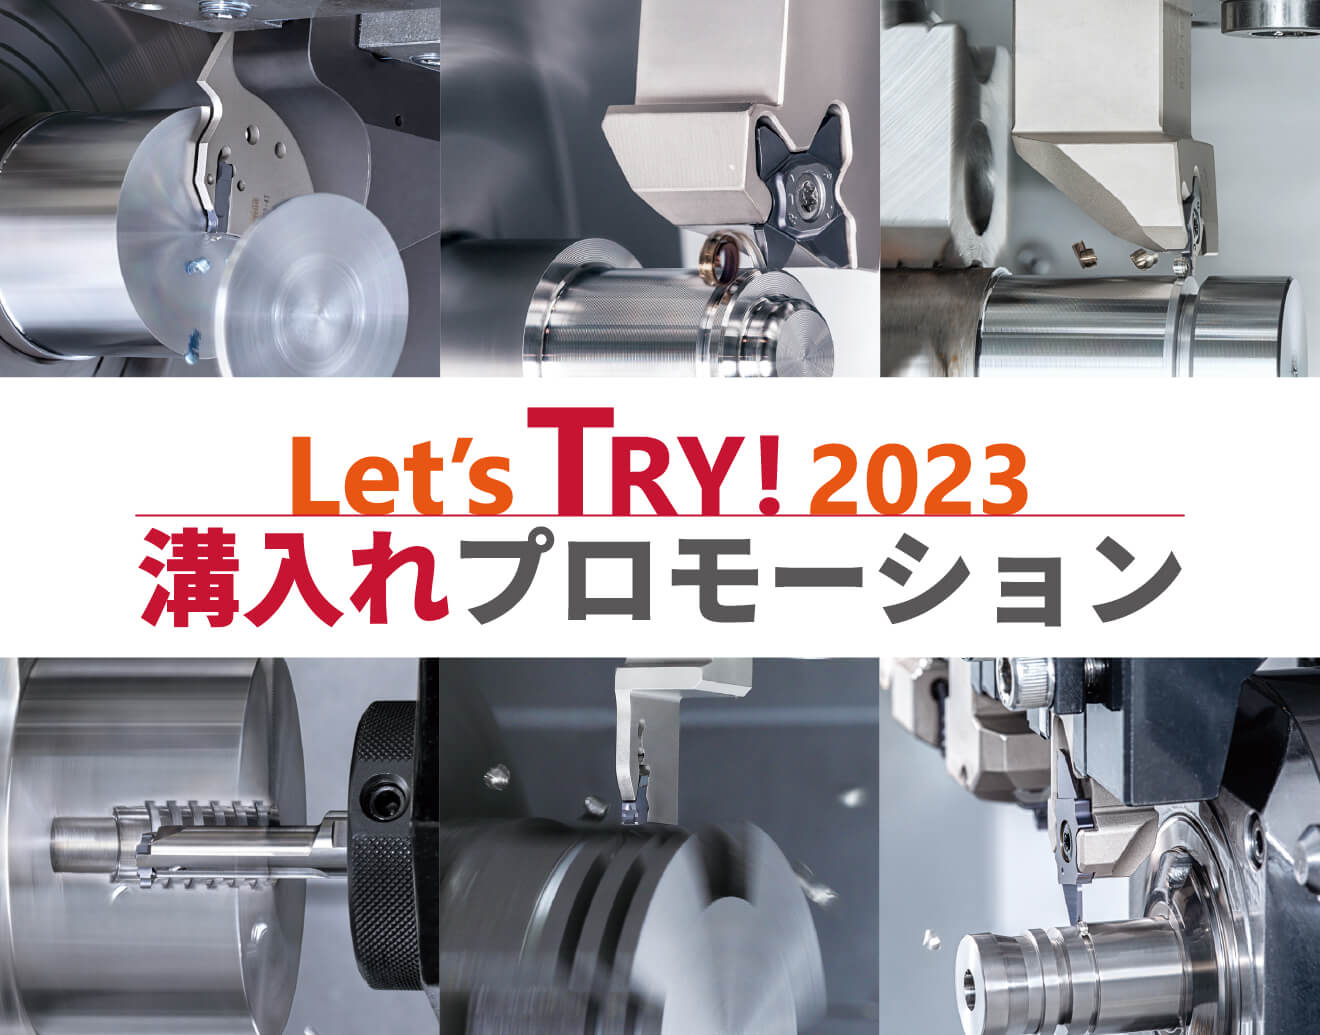 Let's TRY! 2023 溝入れプロモーション - 株式会社タンガロイ